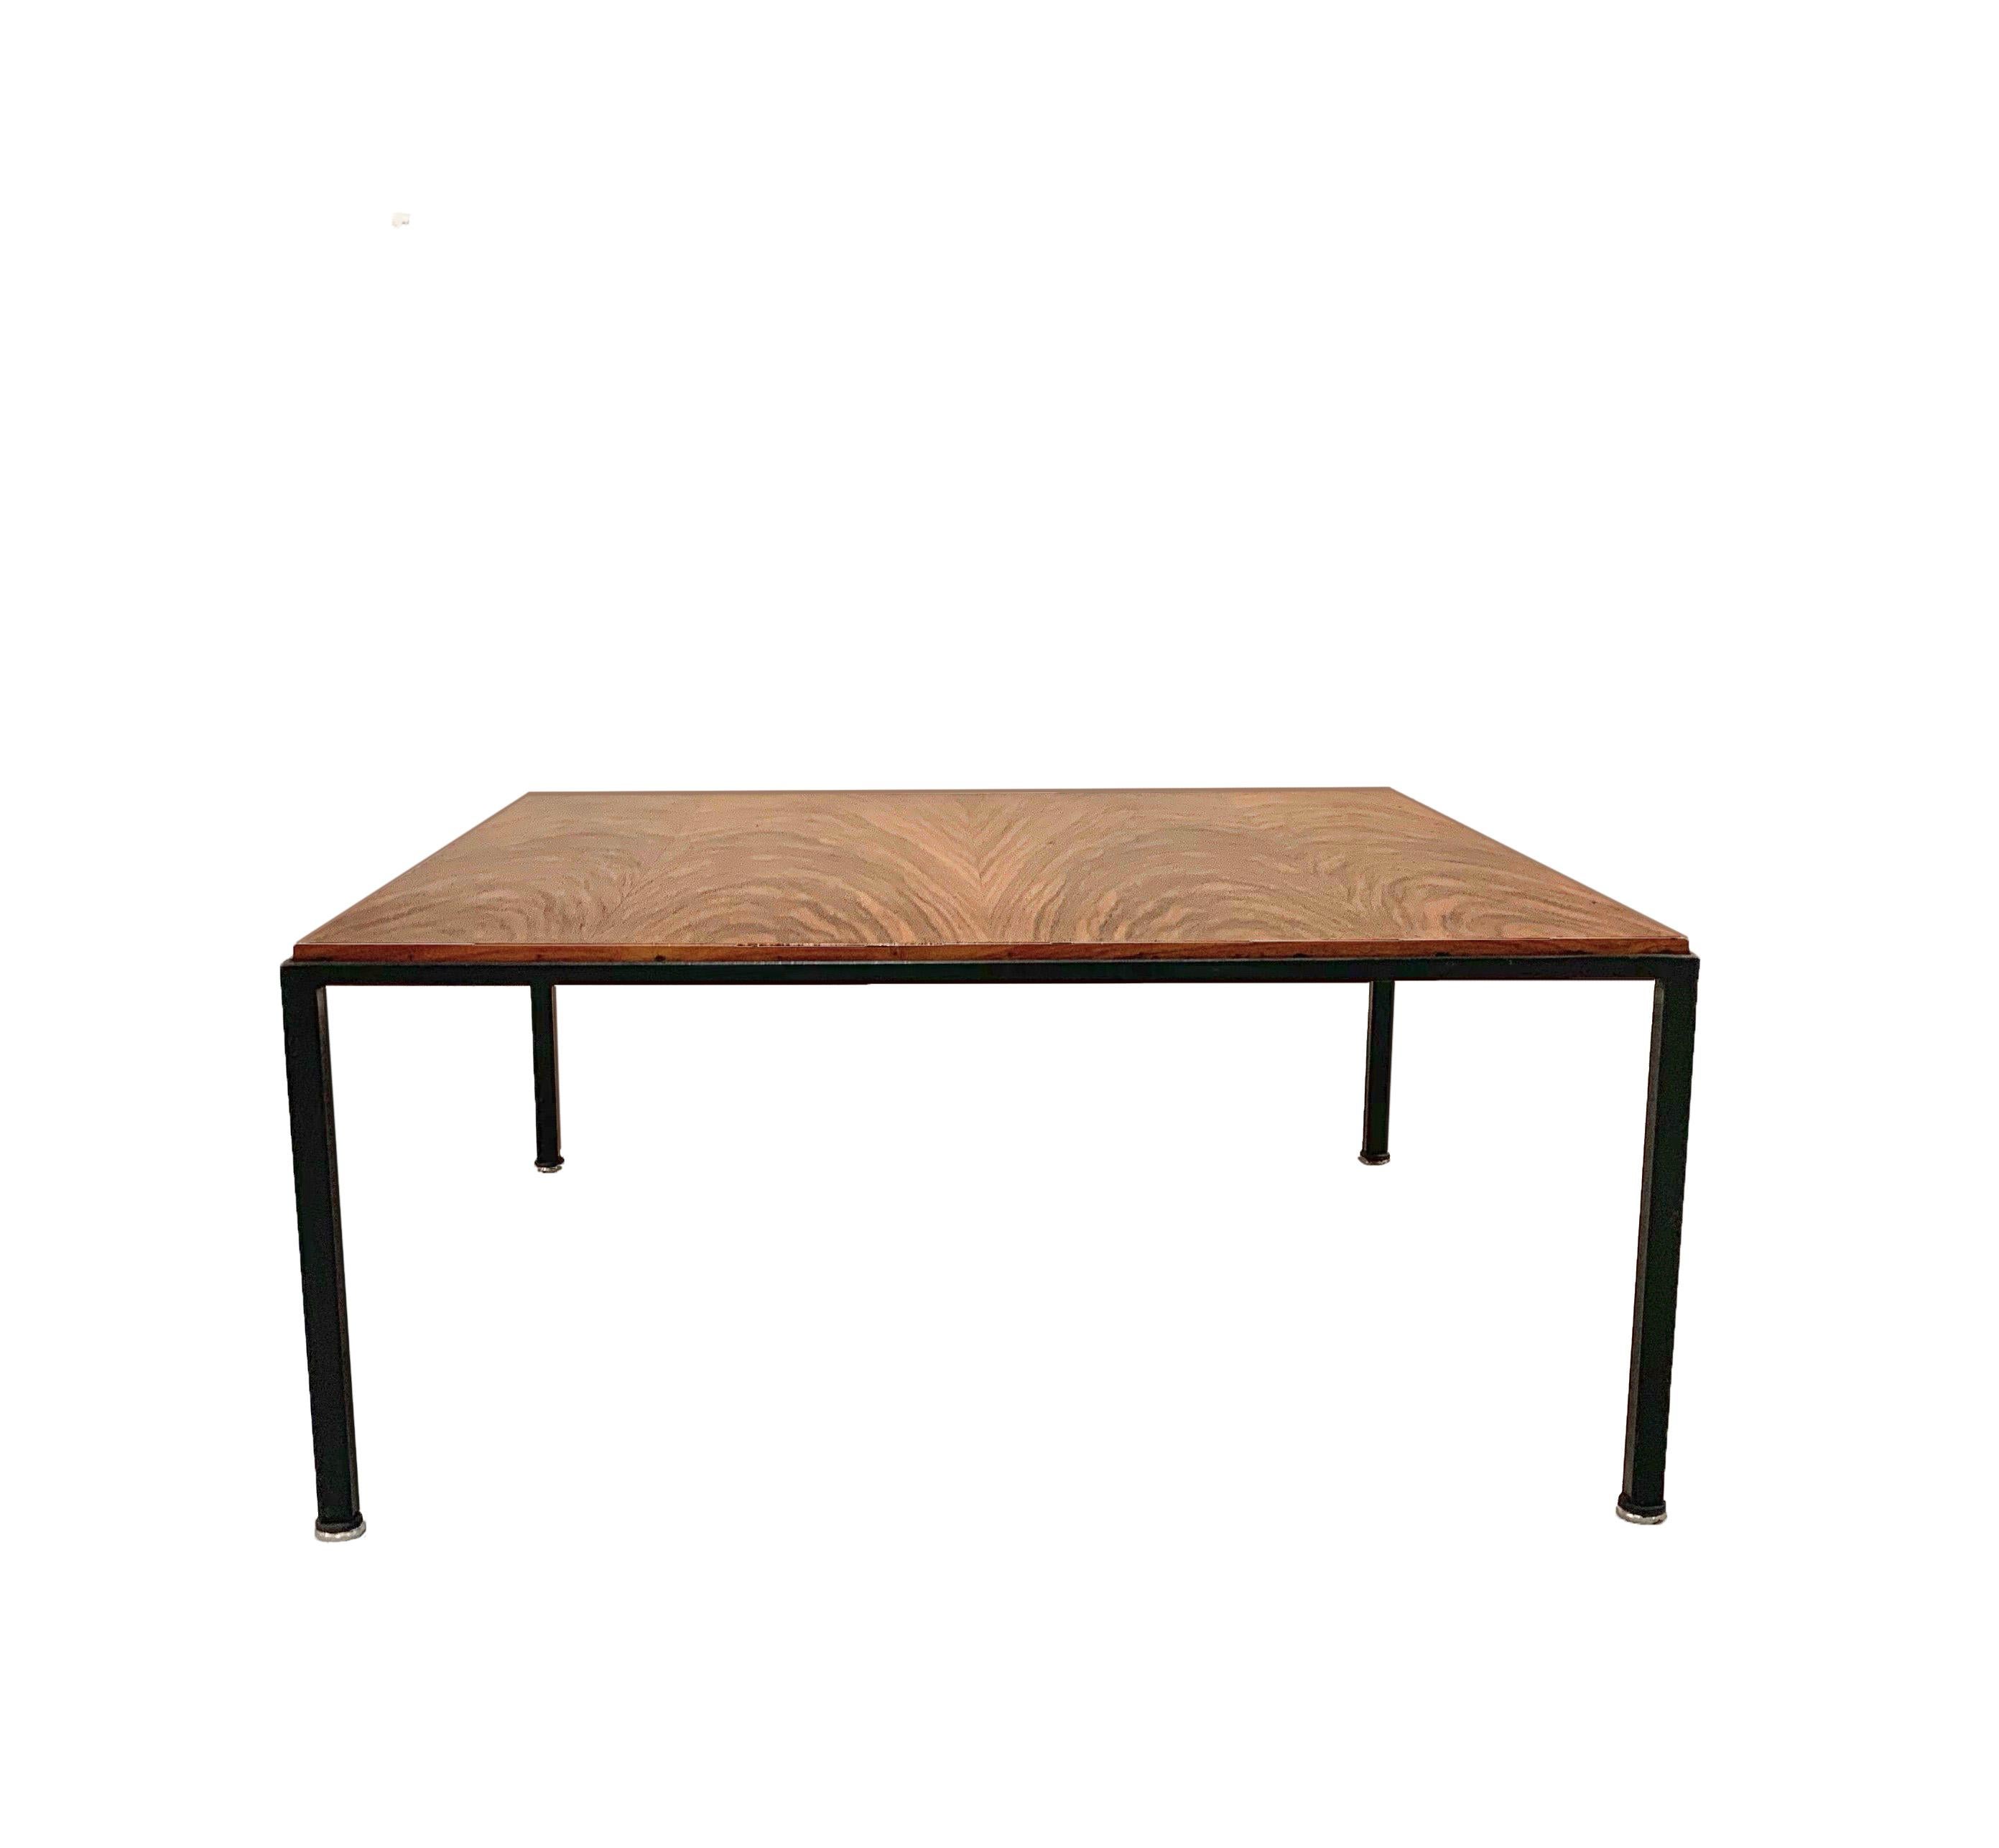 Italian Midcentury Square Coffee Table in wood and Iron Italy 1960s Italia Design